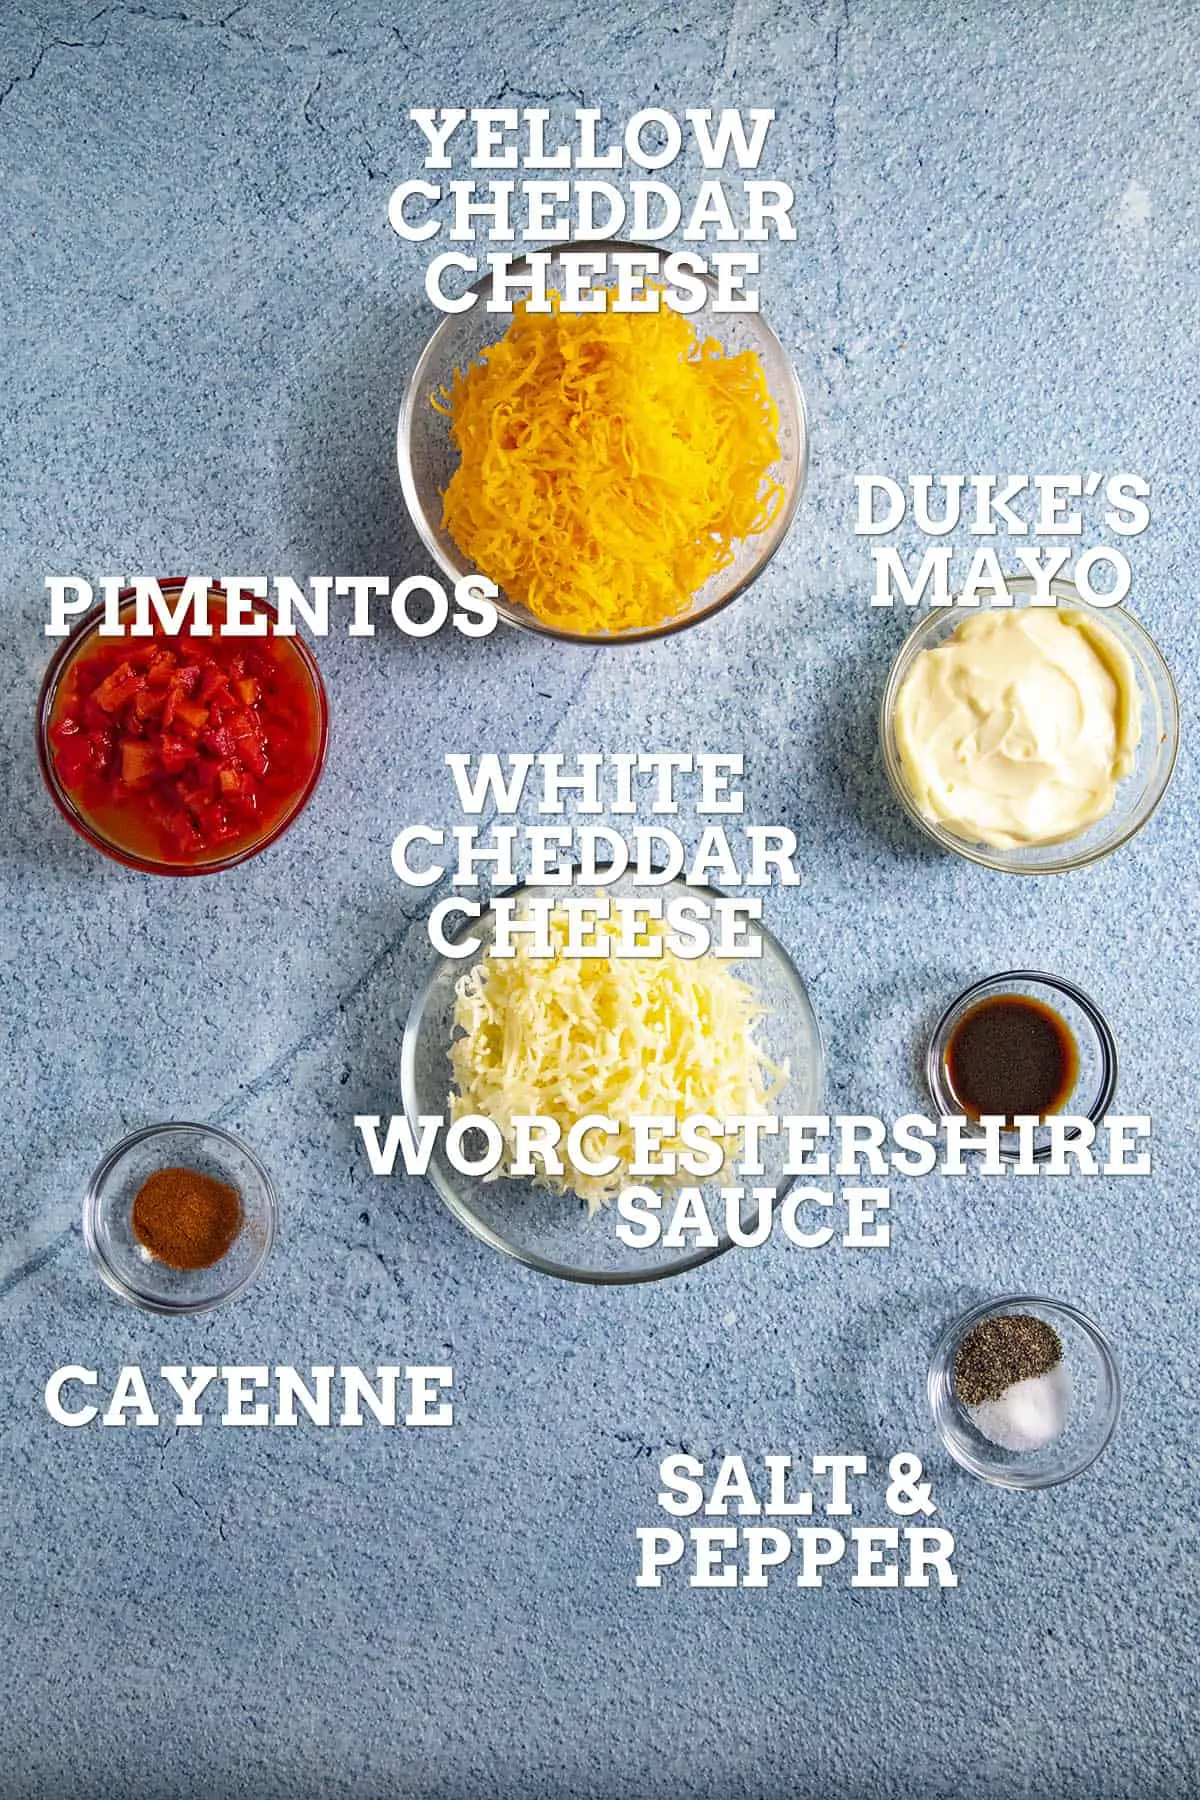 Pimento Cheese Ingredients